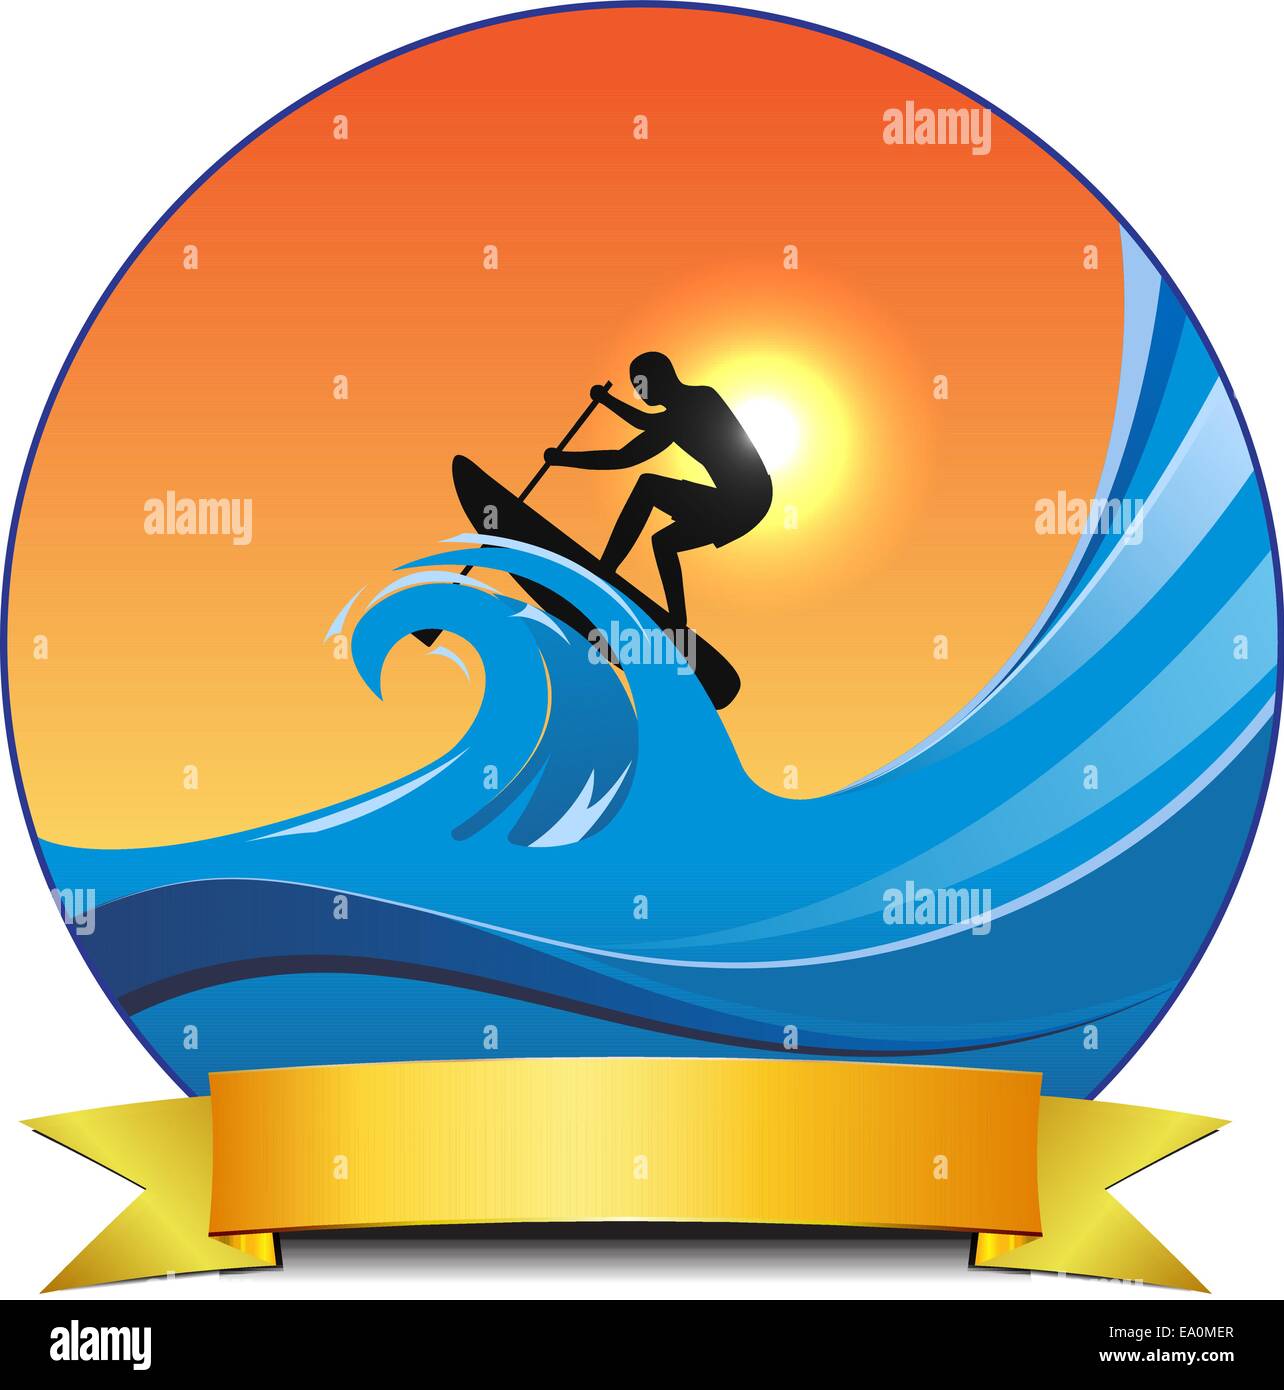 Vektorgrafik Konzept Surf Paddel, eps10 Datei, Transparenz verwendet Stock Vektor